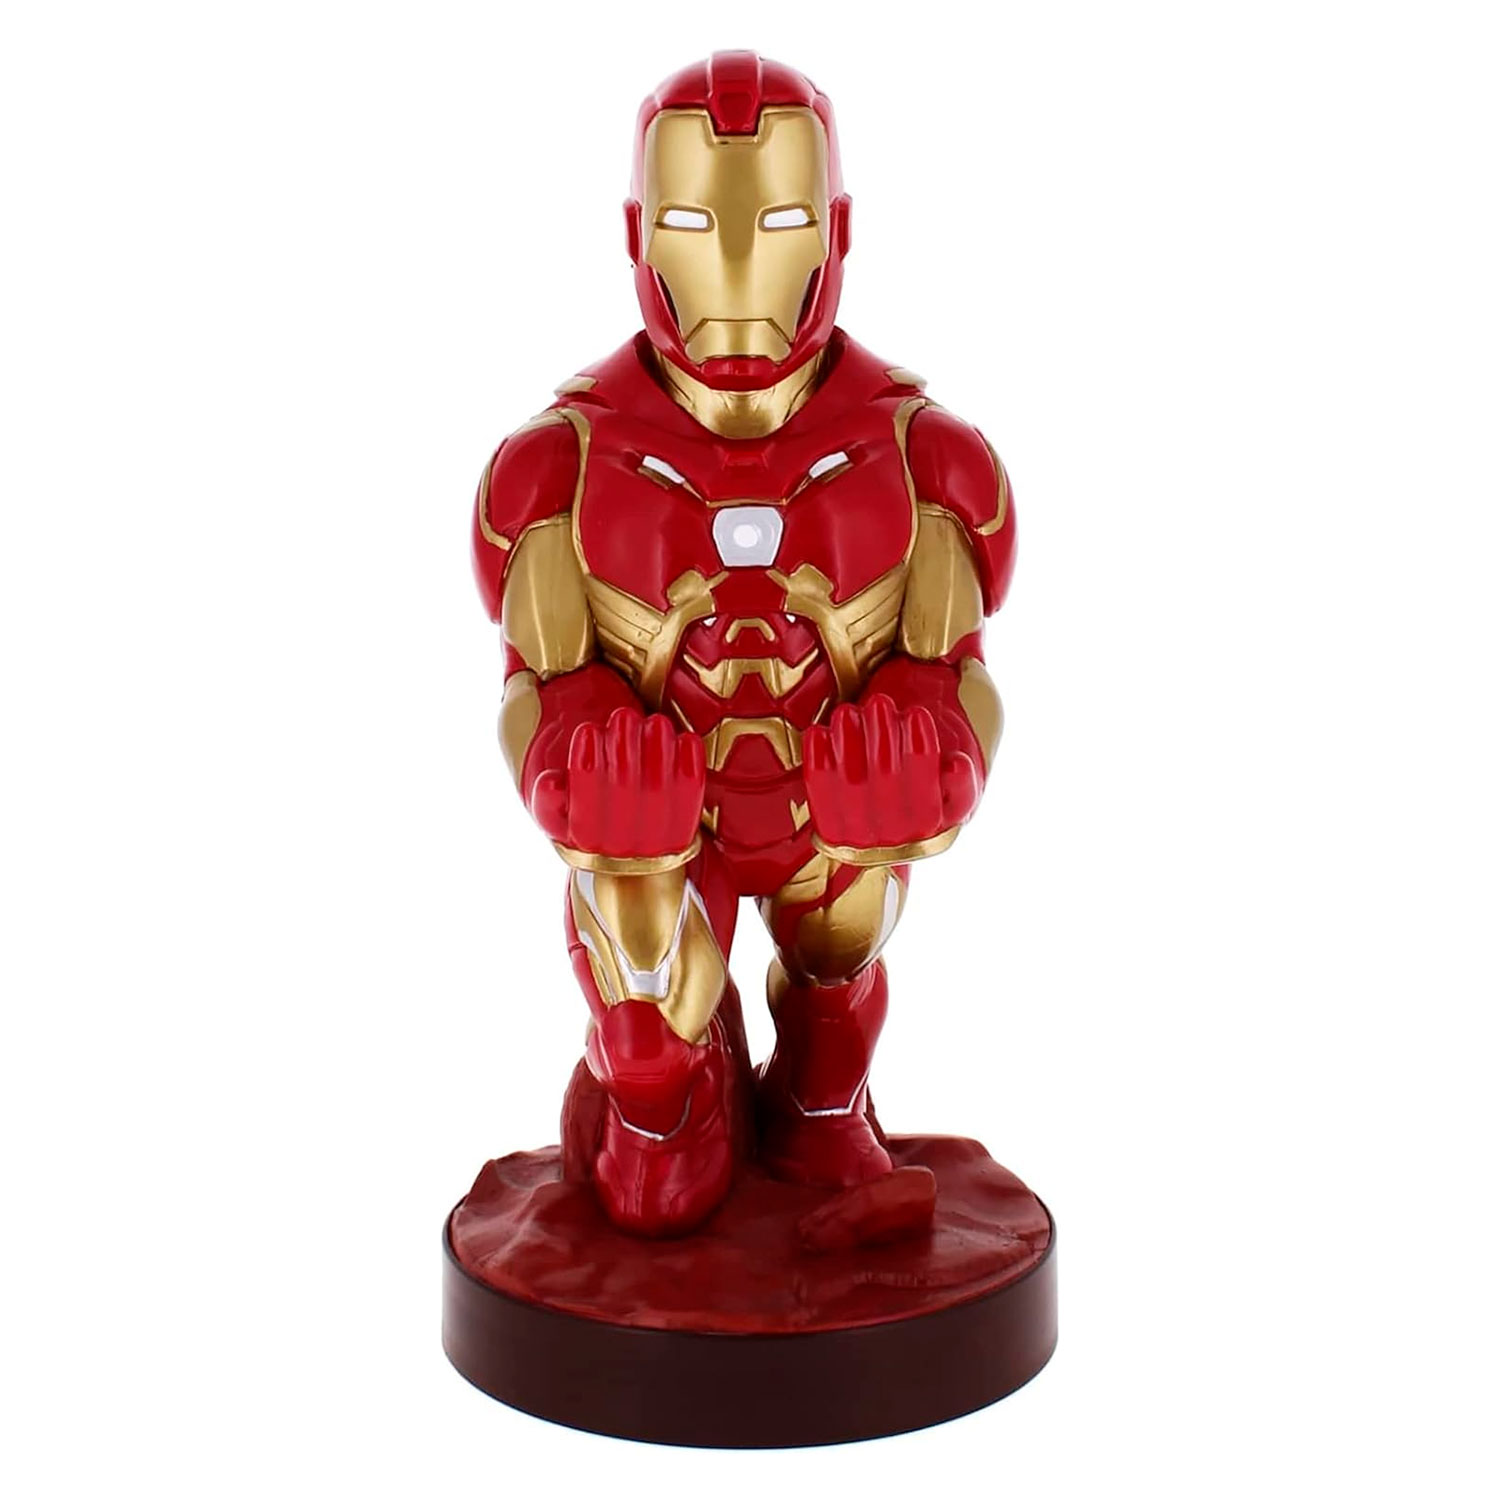 Suporte Cable Guys Avangers Iron Man para Controle e Smartphone